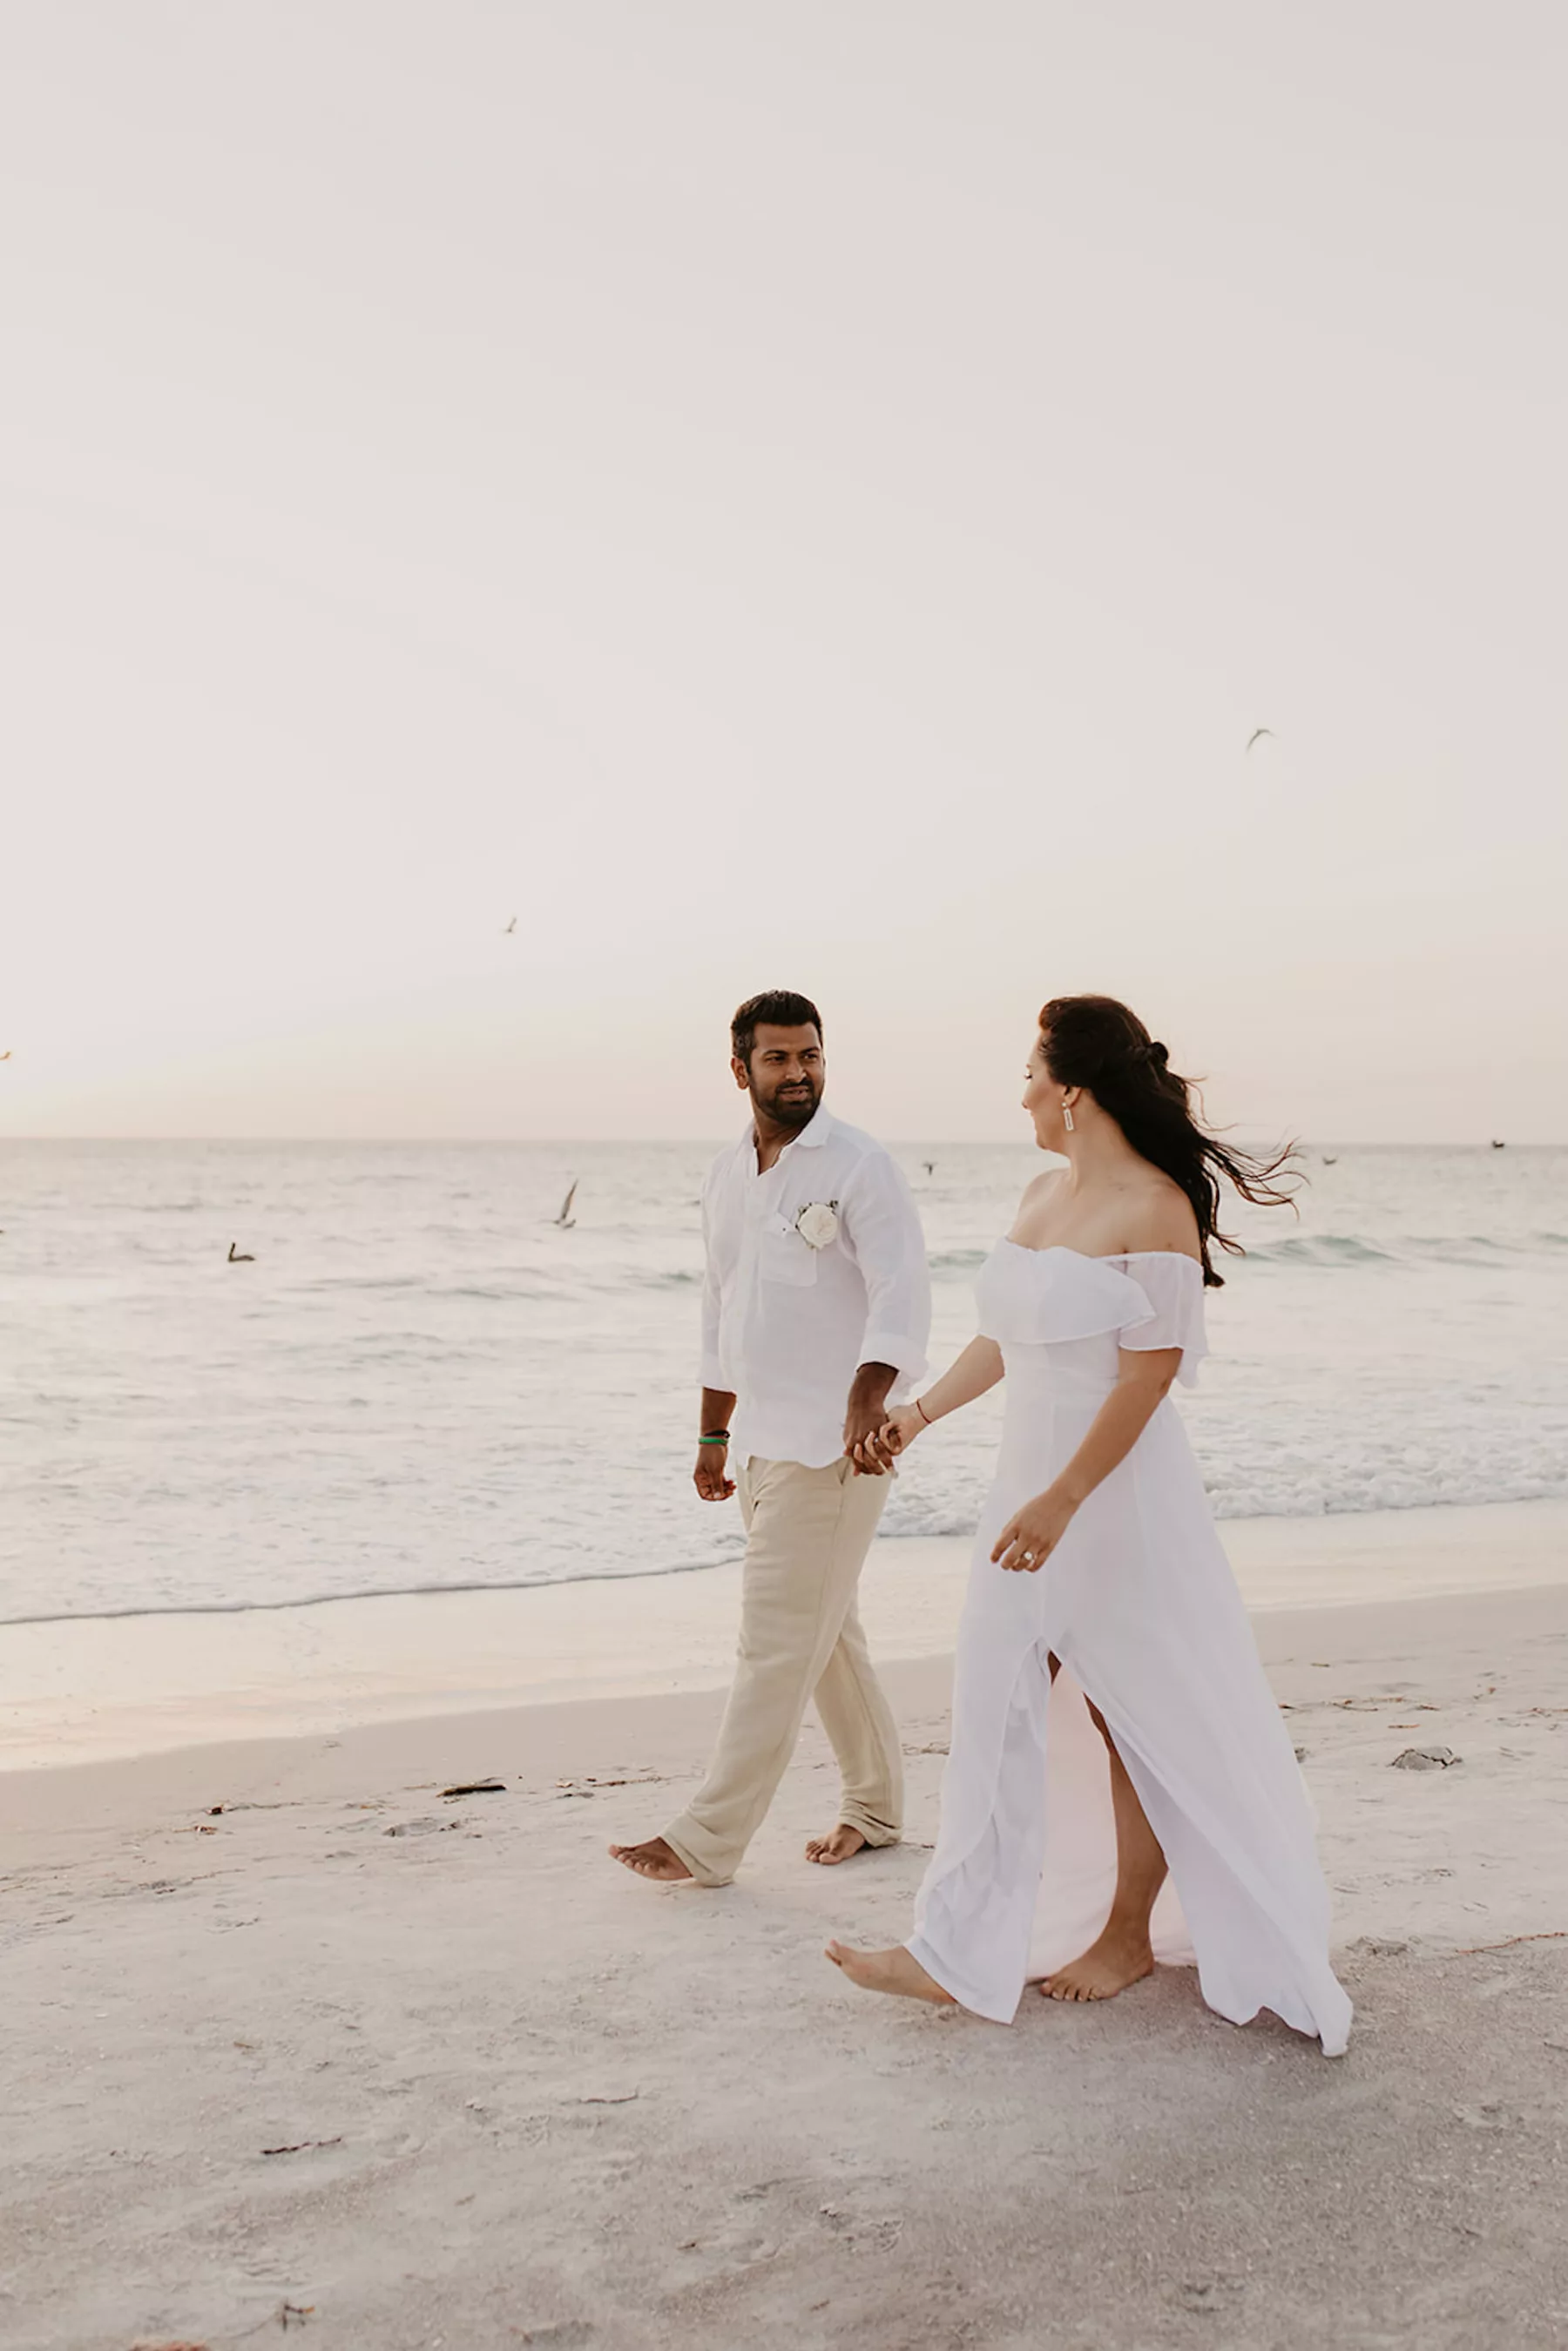 Bride and Groom Sunset Beach Walk Wedding Portrait | Tampa Bay Photographer Valentina Rose Photography